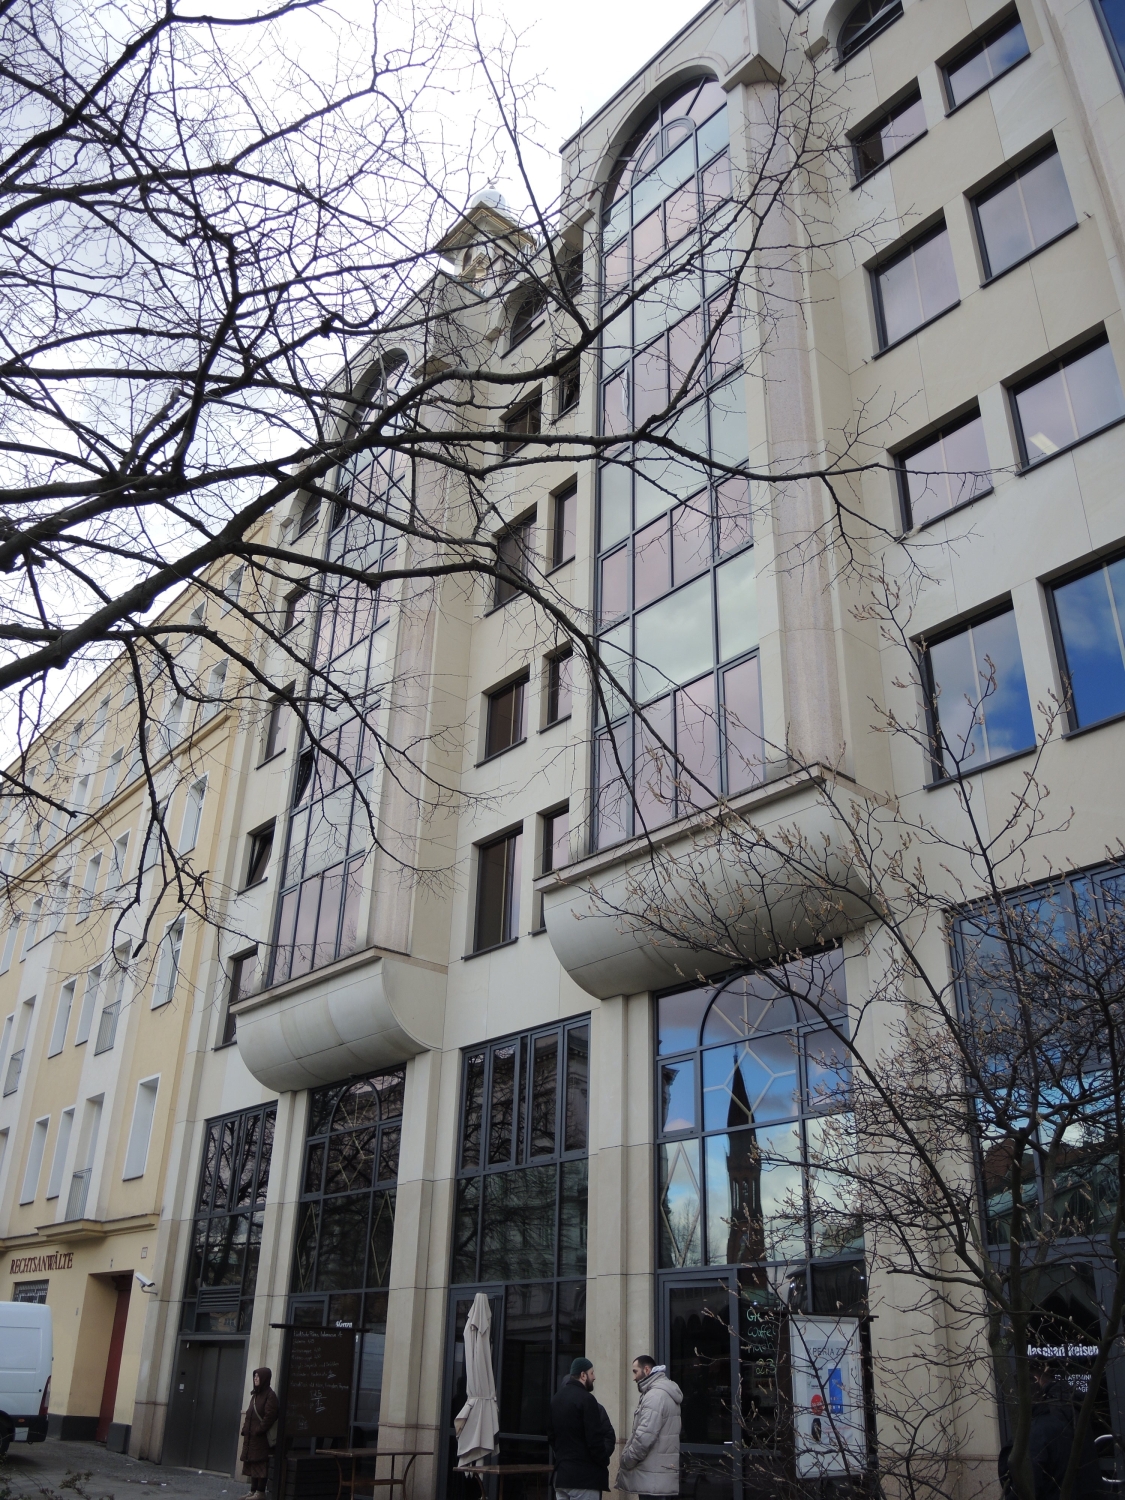 Exterior view of the façade on Wiener straße